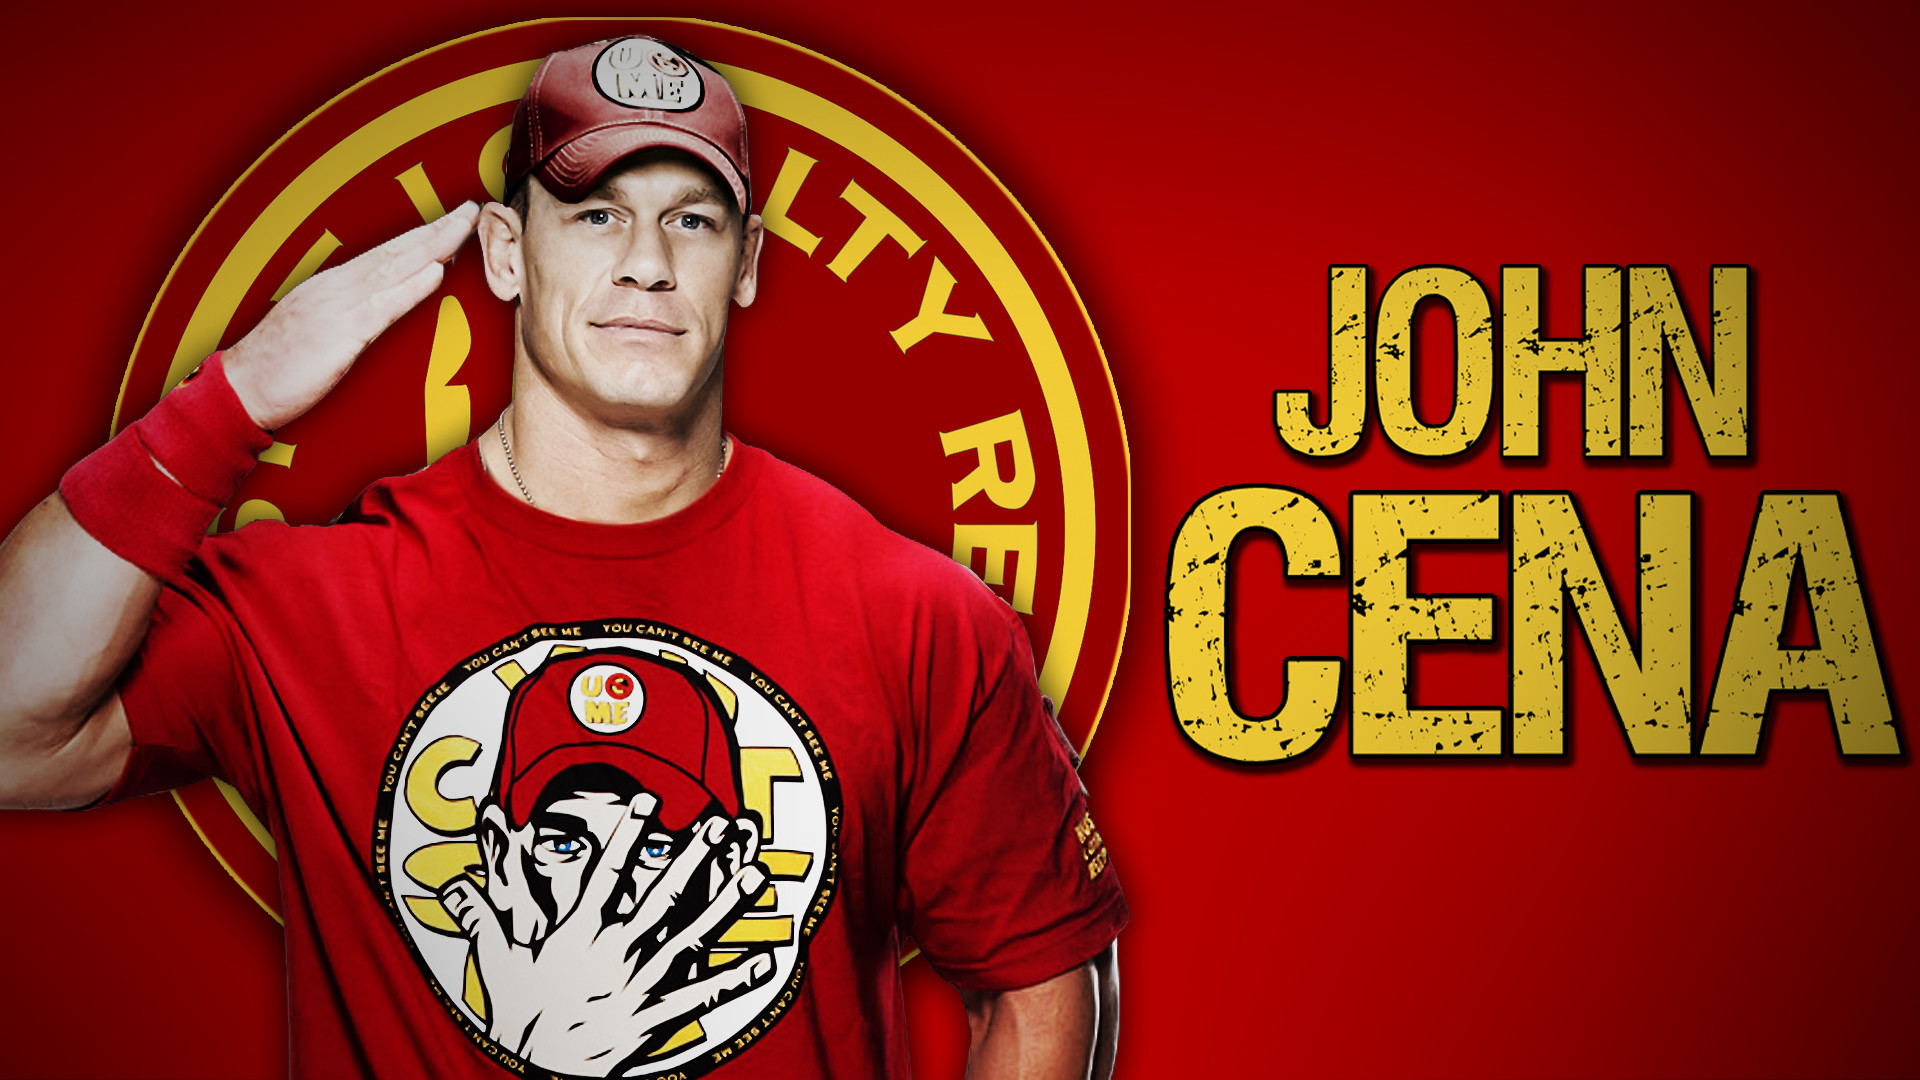 1920x1080 John Cena Red Tshirt Wallpaper